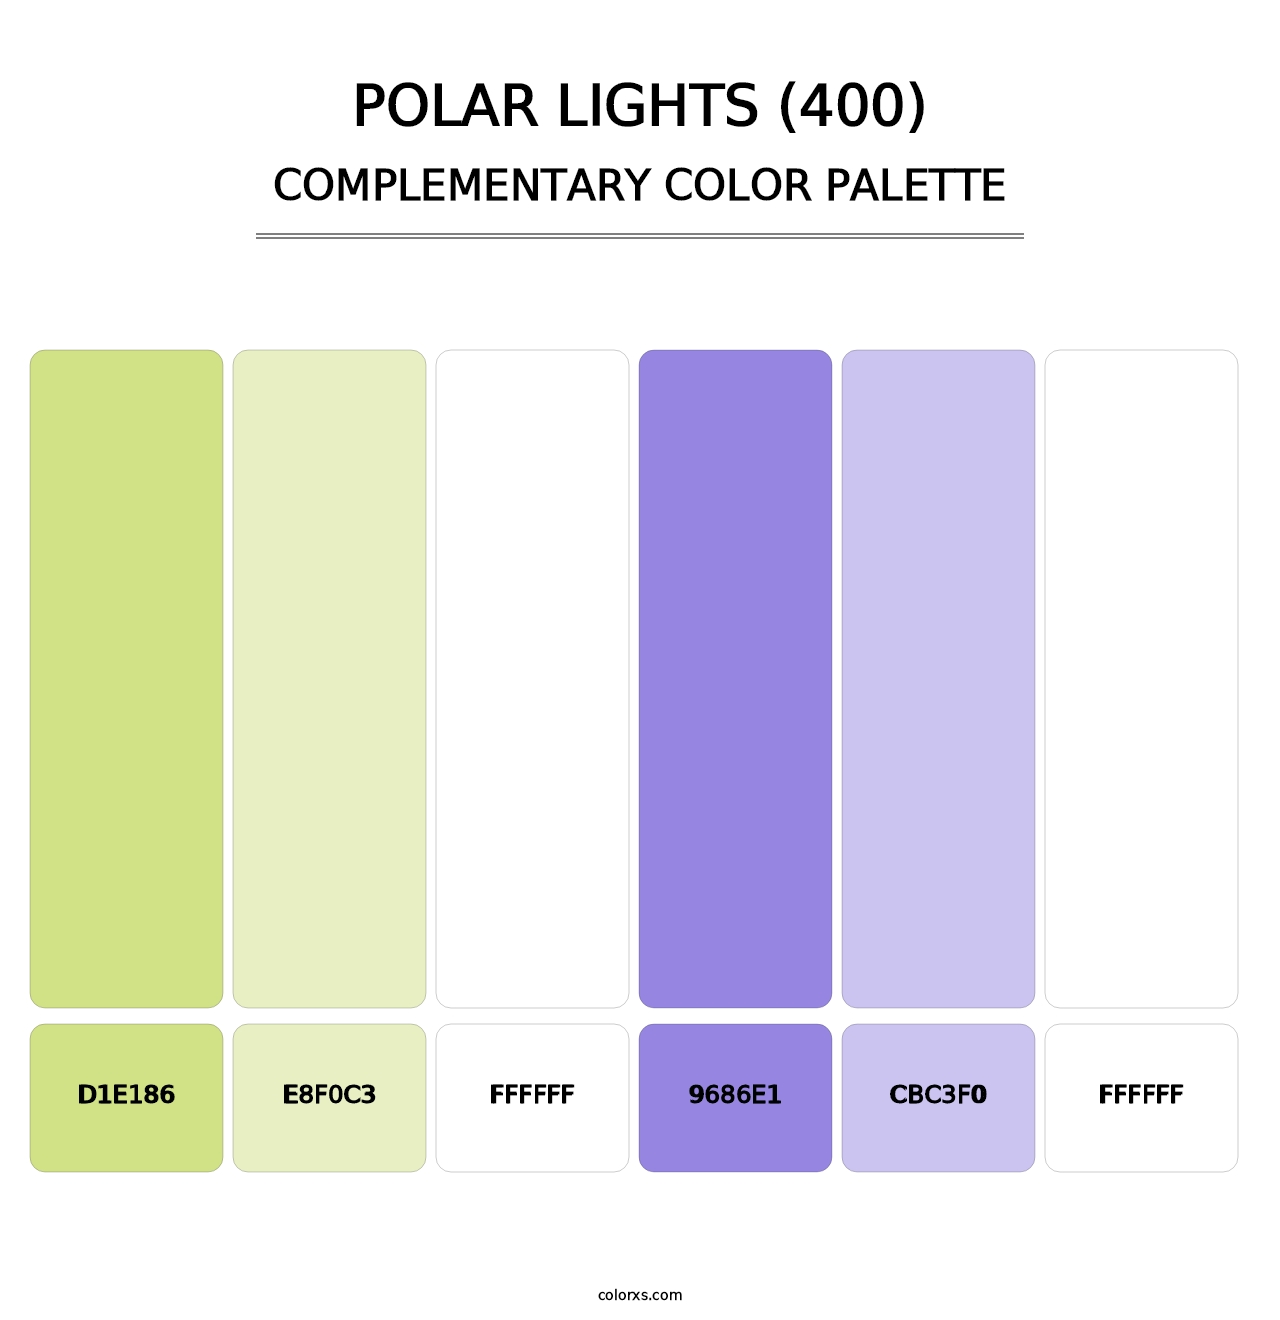 Polar Lights (400) - Complementary Color Palette